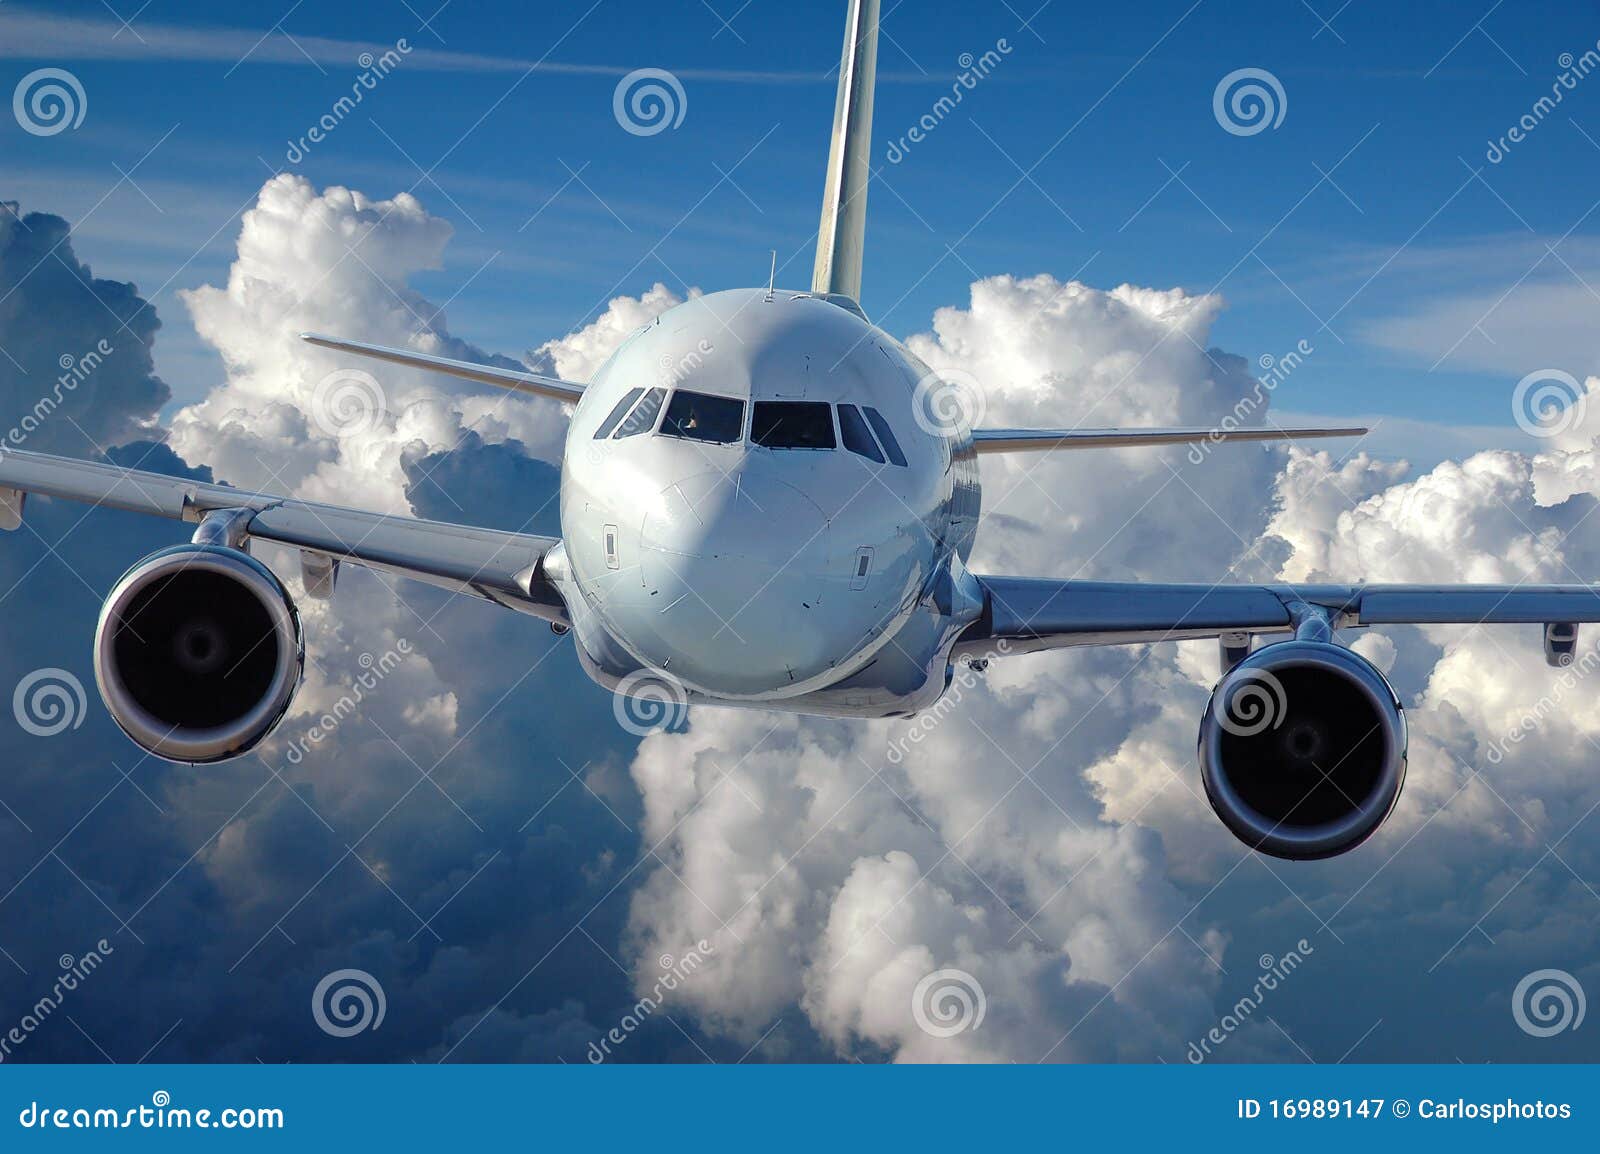 commercial airliner in flight